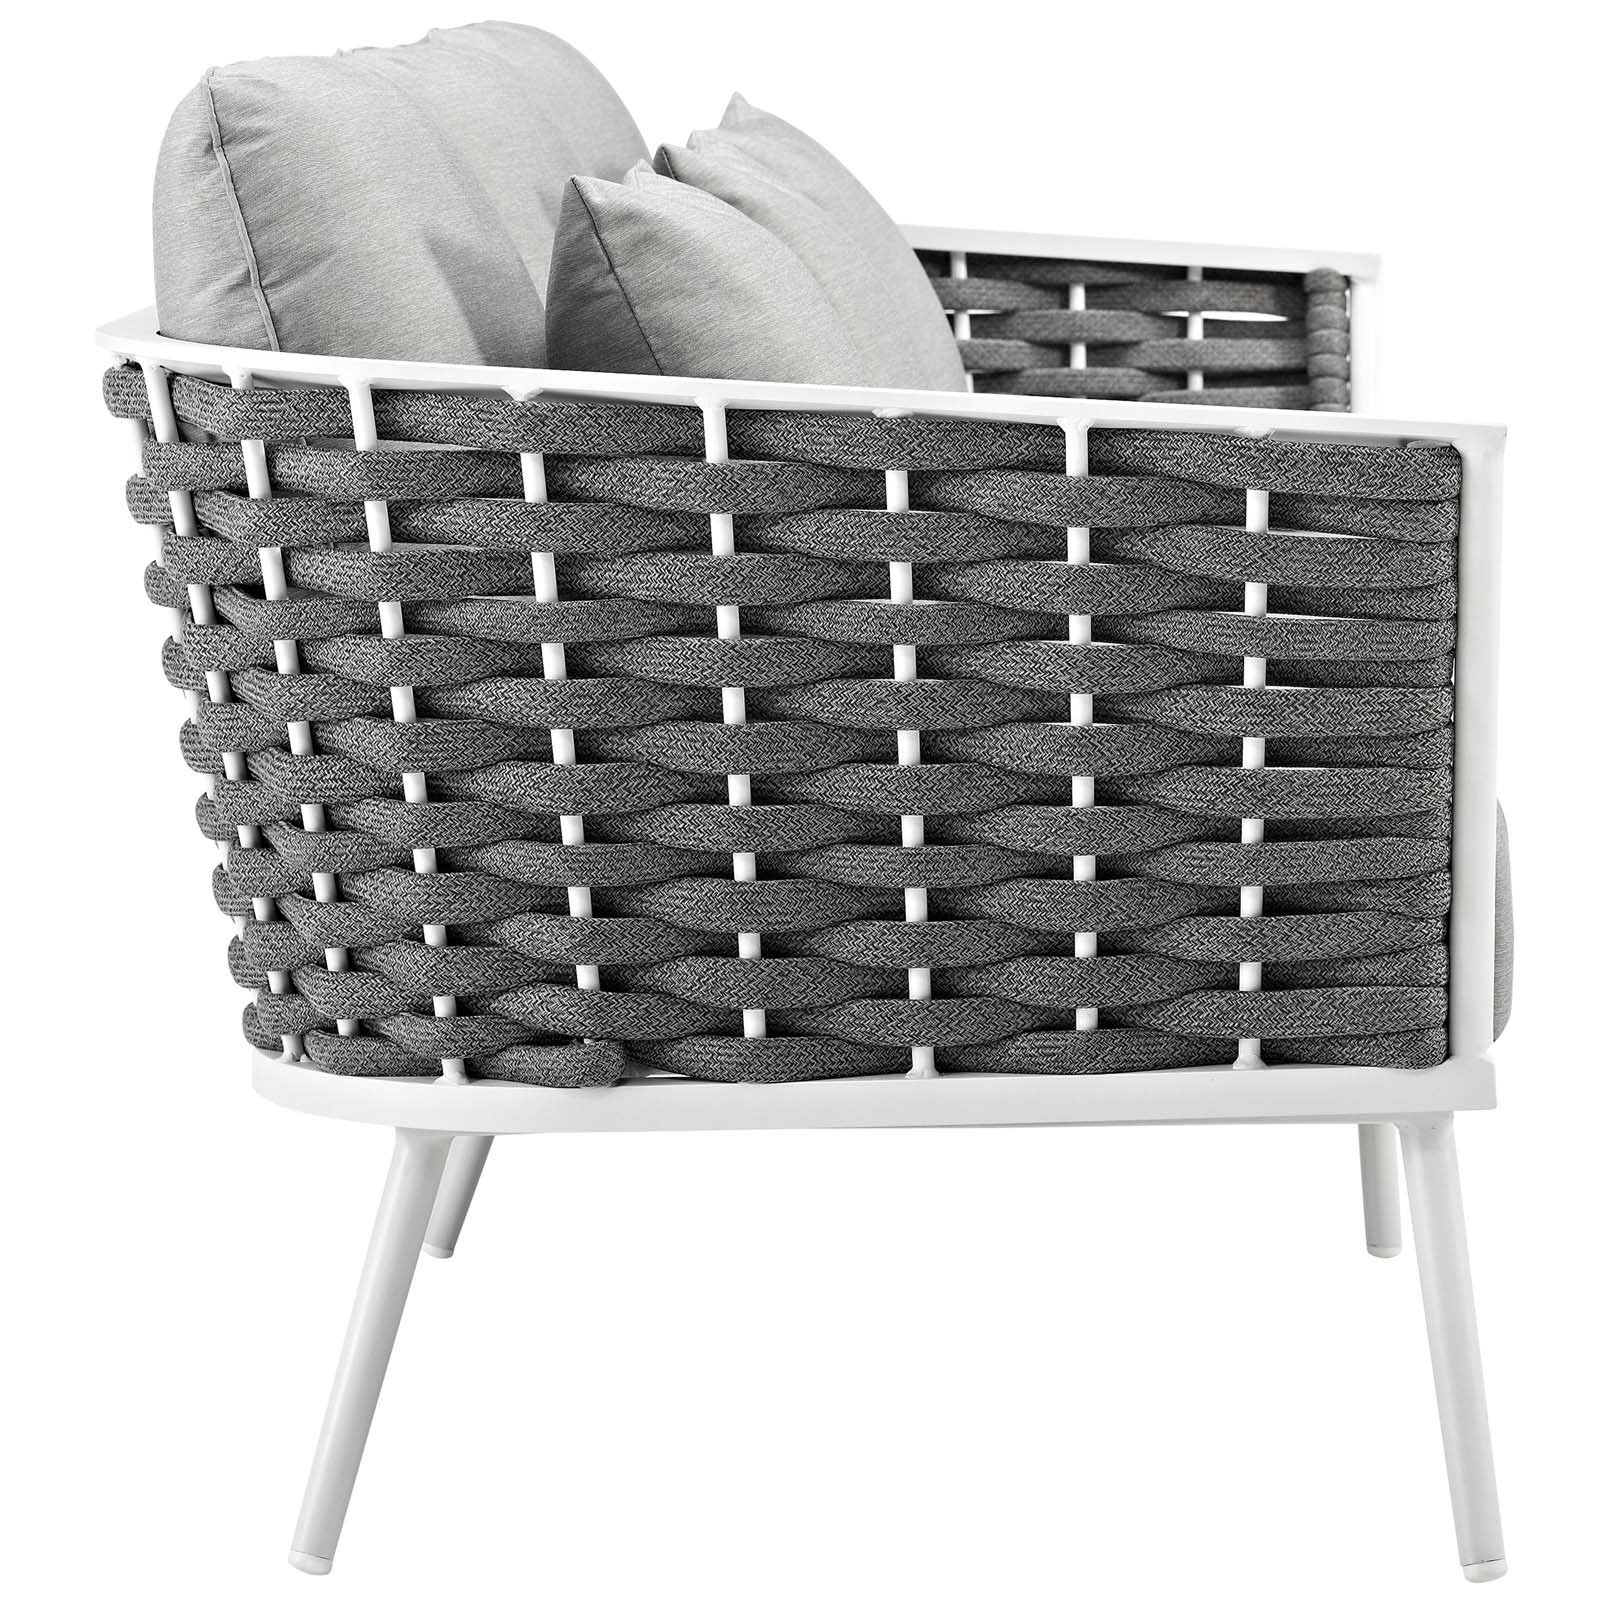 Modern Contemporary Urban Design Outdoor Patio Balcony Garden Furniture Lounge Chair and Sofa Set, Fabric Aluminium, White Grey Gray - image 5 of 8